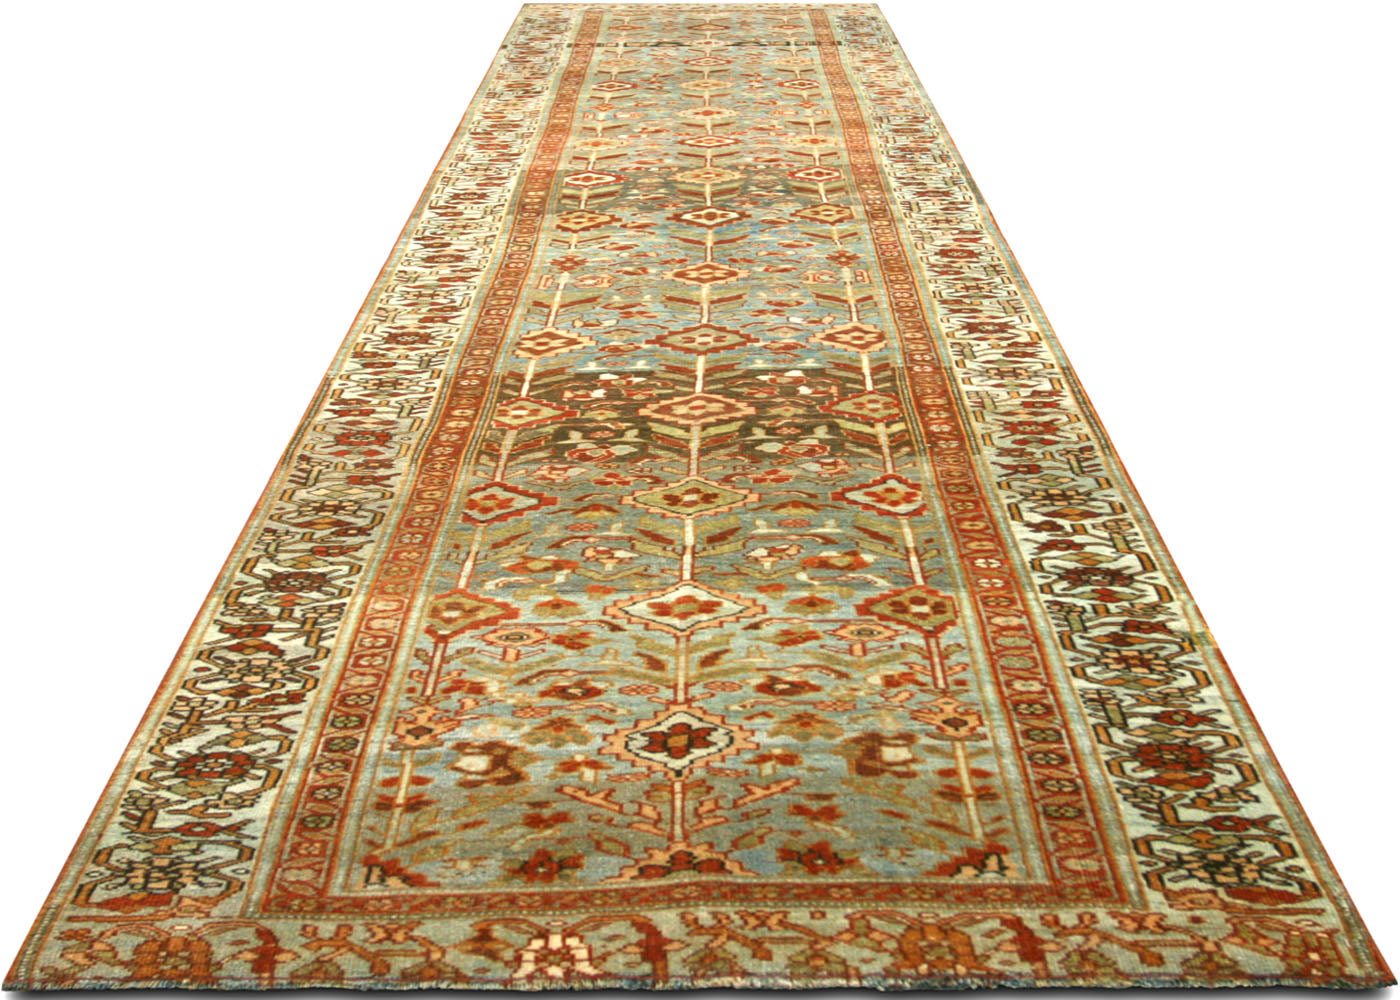 Antique Persian Bidjar Runner - 3'9" x 16'8'